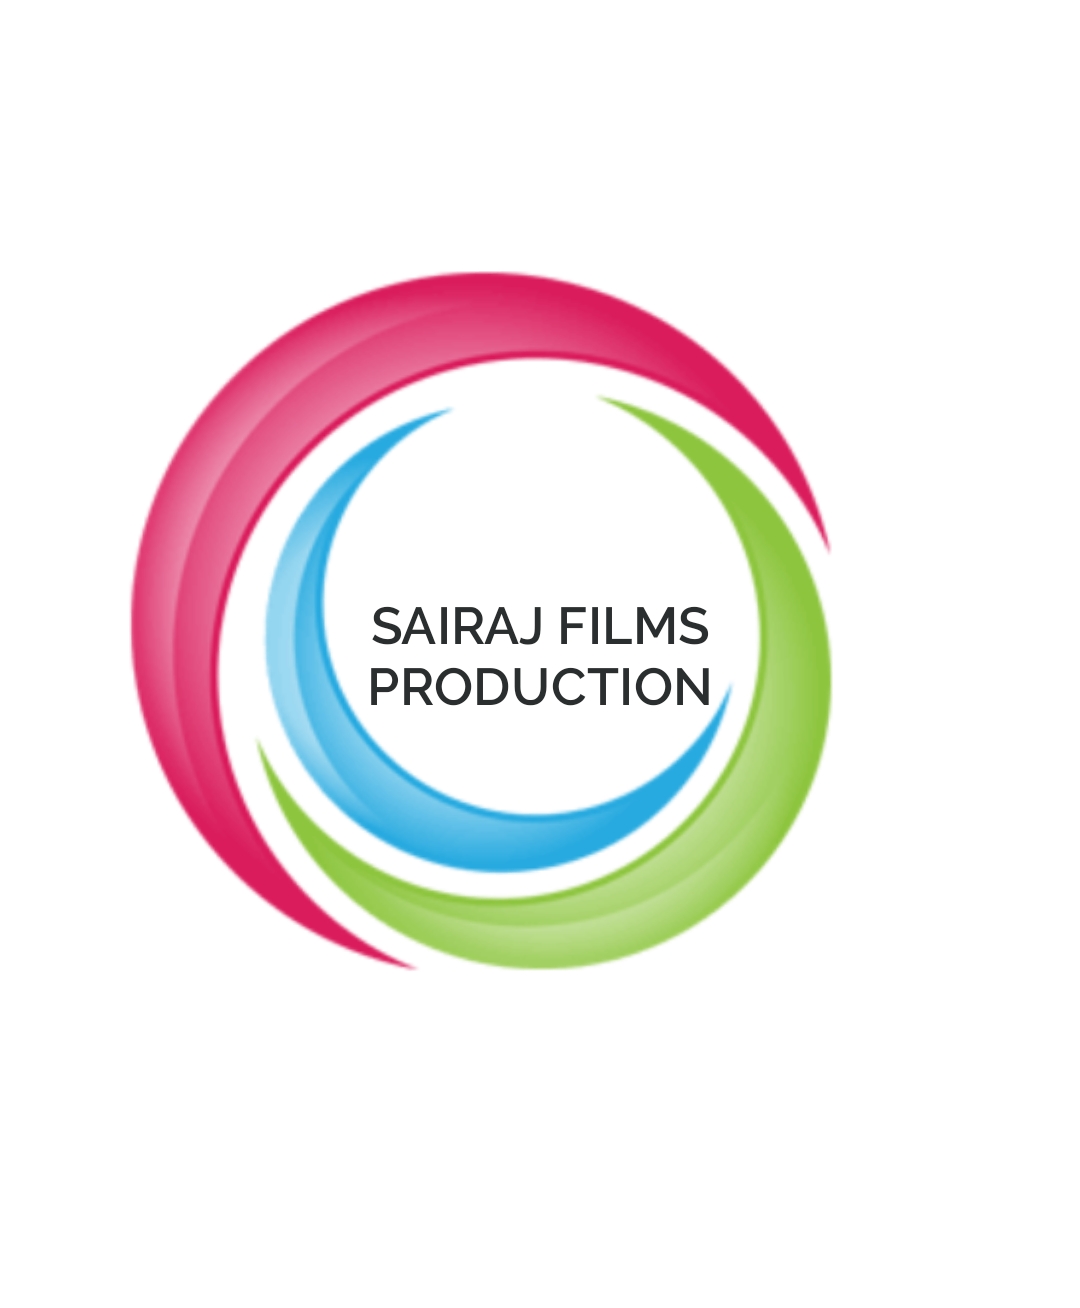 Sairaj Films Production logo